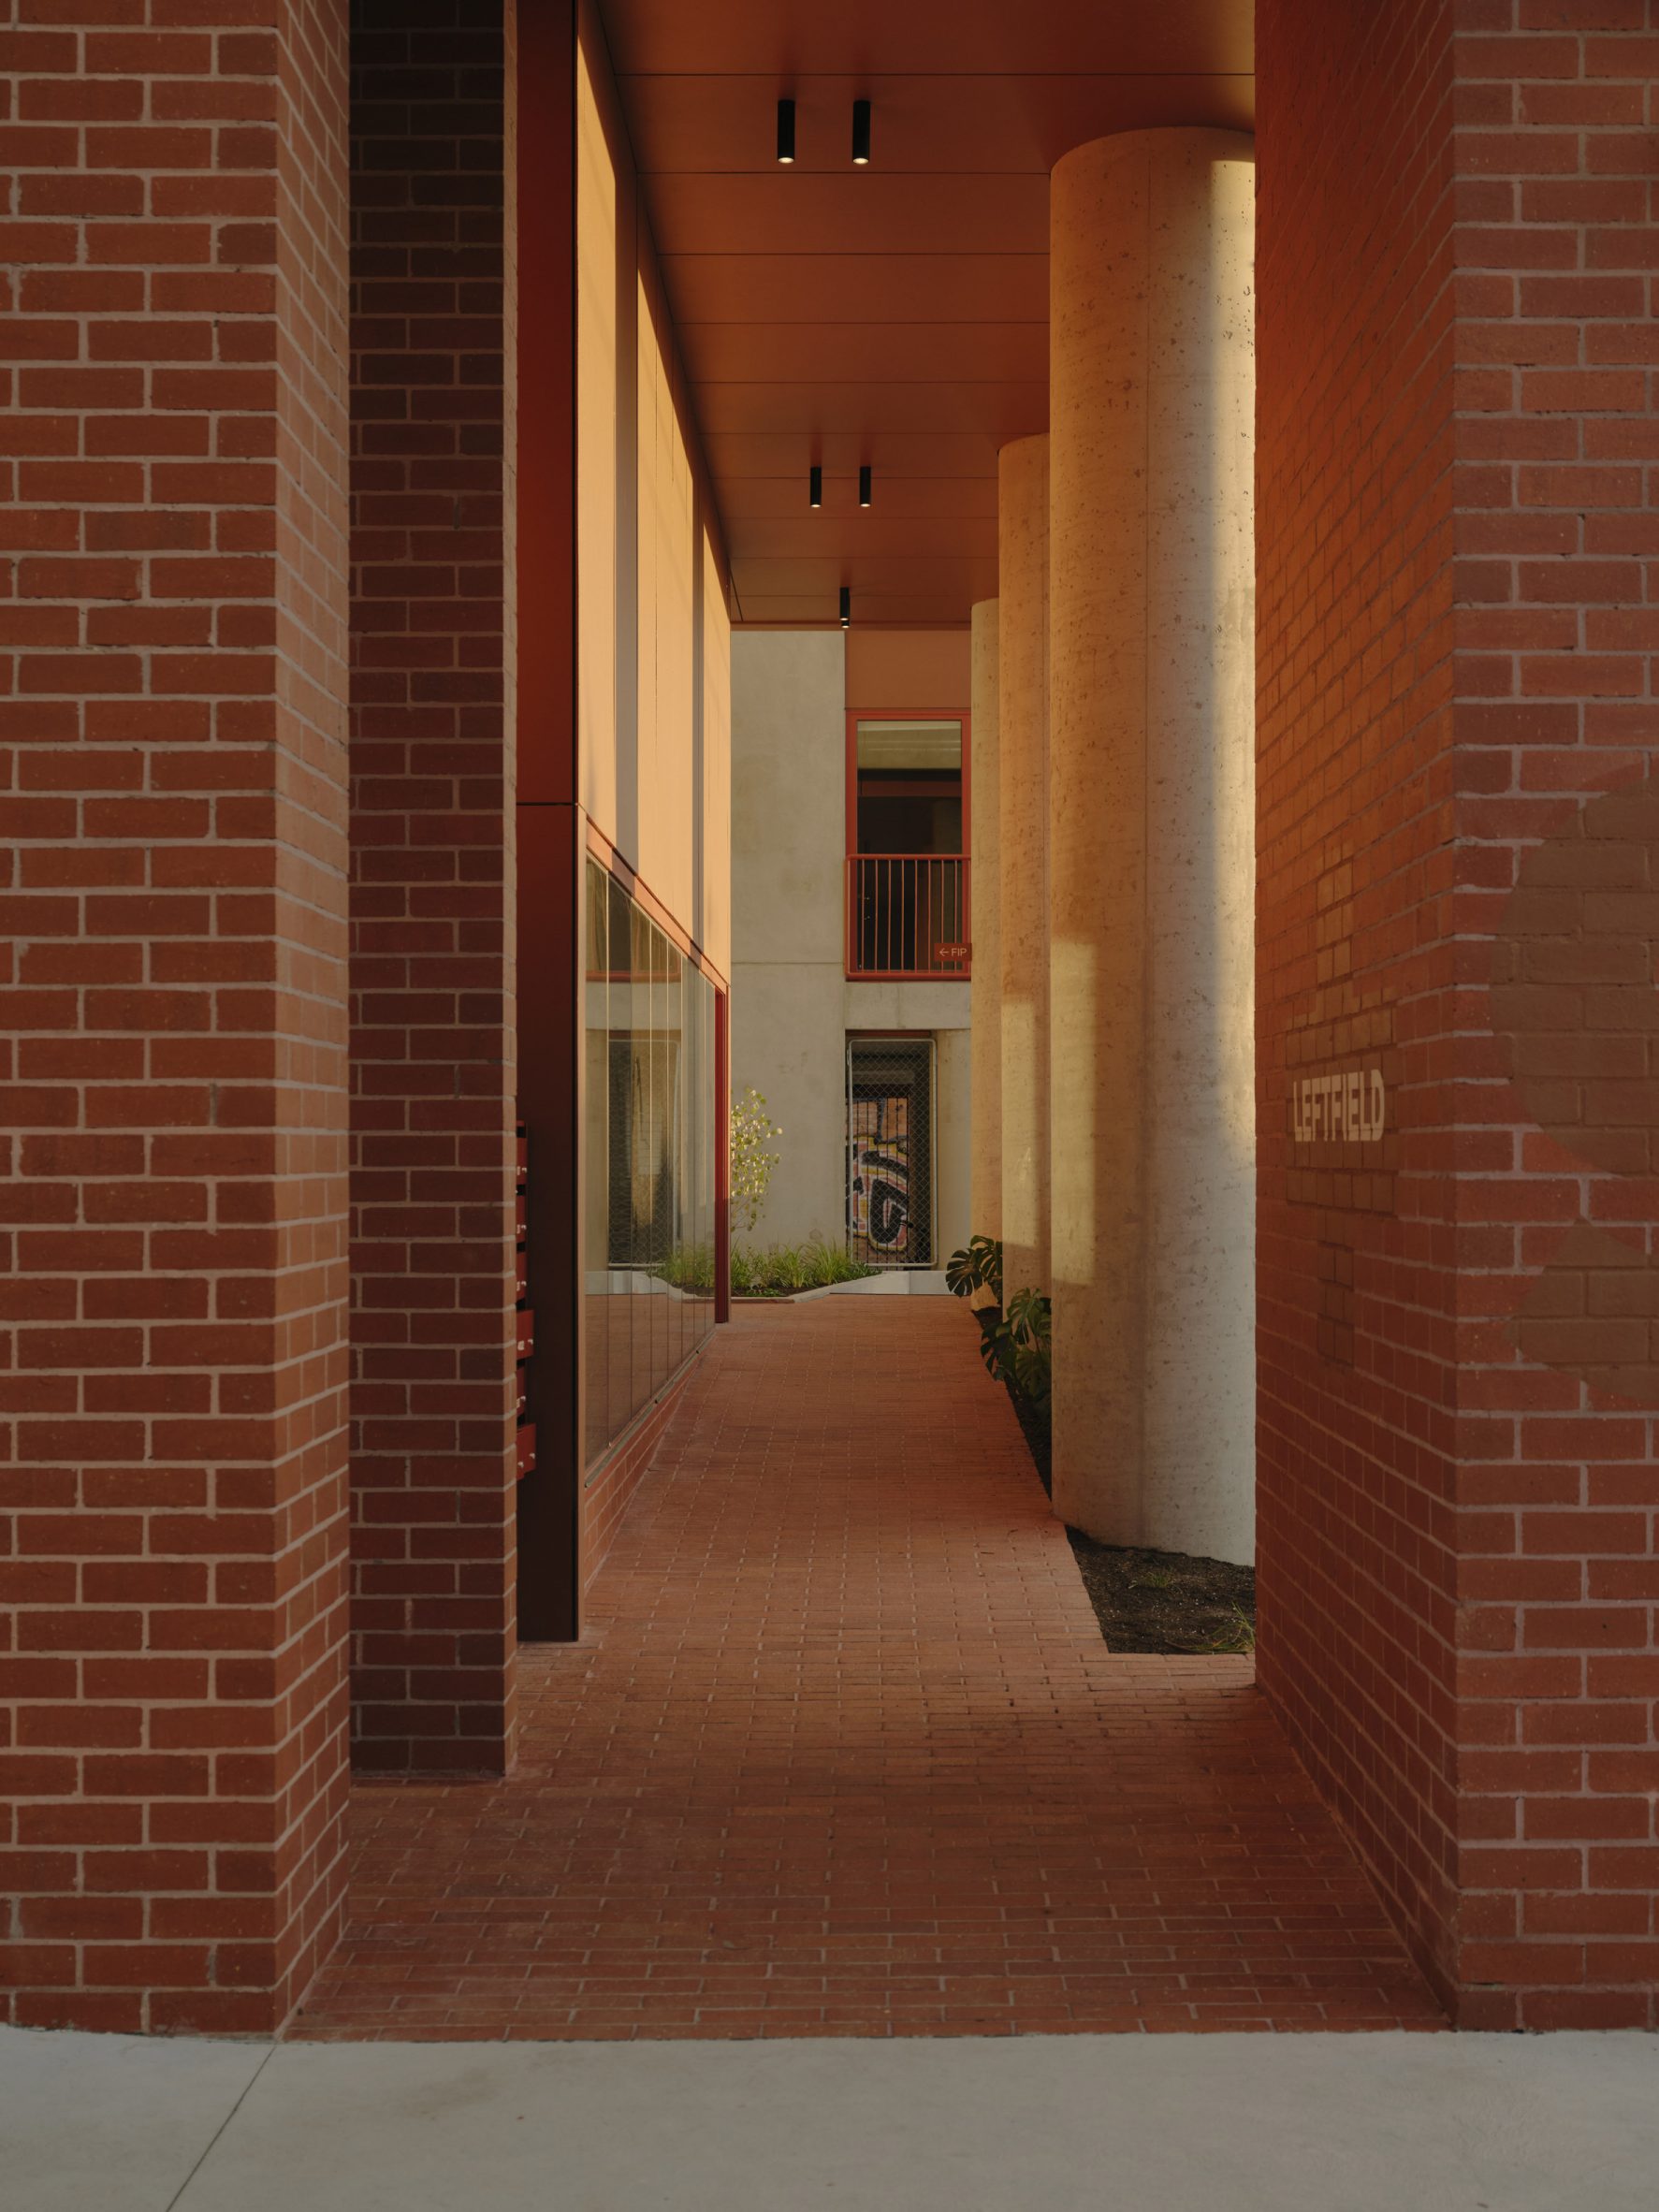 Photo of a walkway